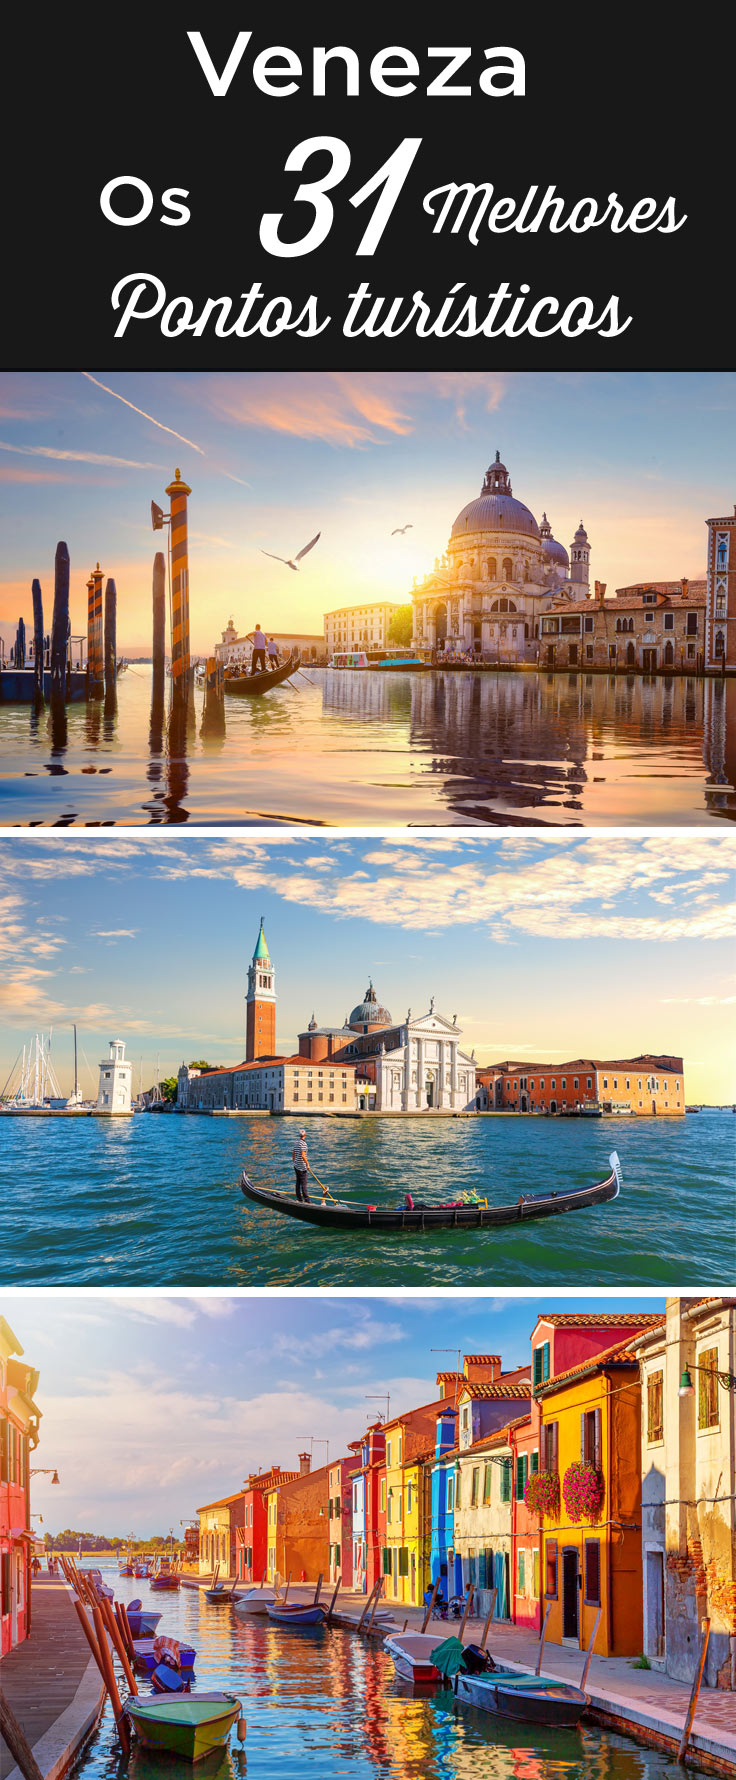 Veneza pontos turisticos